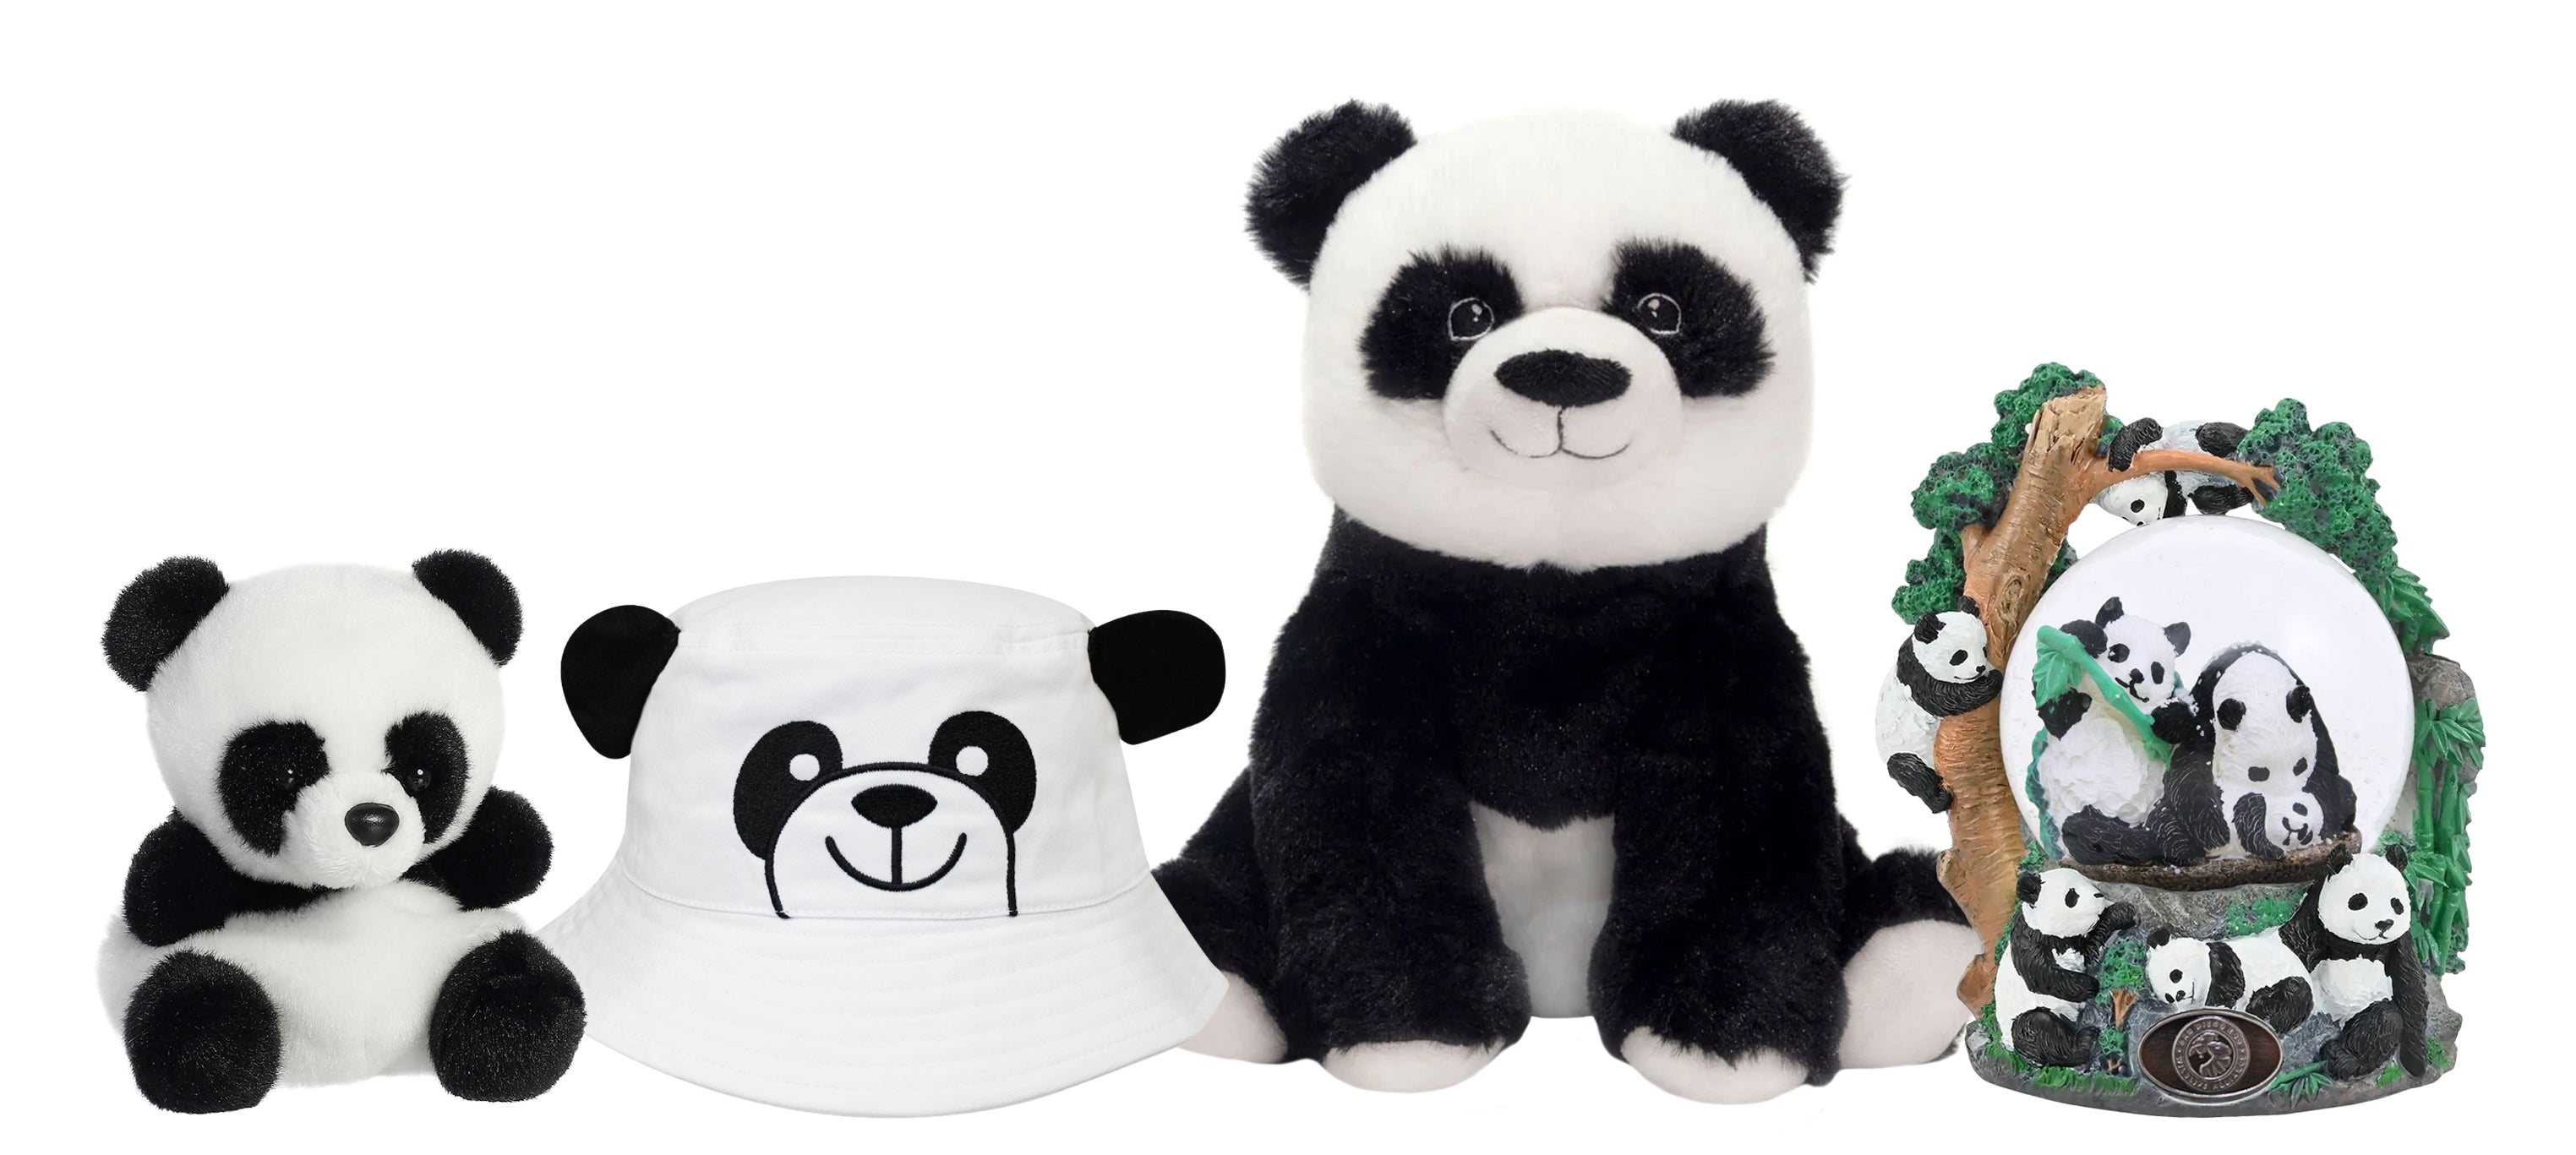 Panda Merchandise Collection